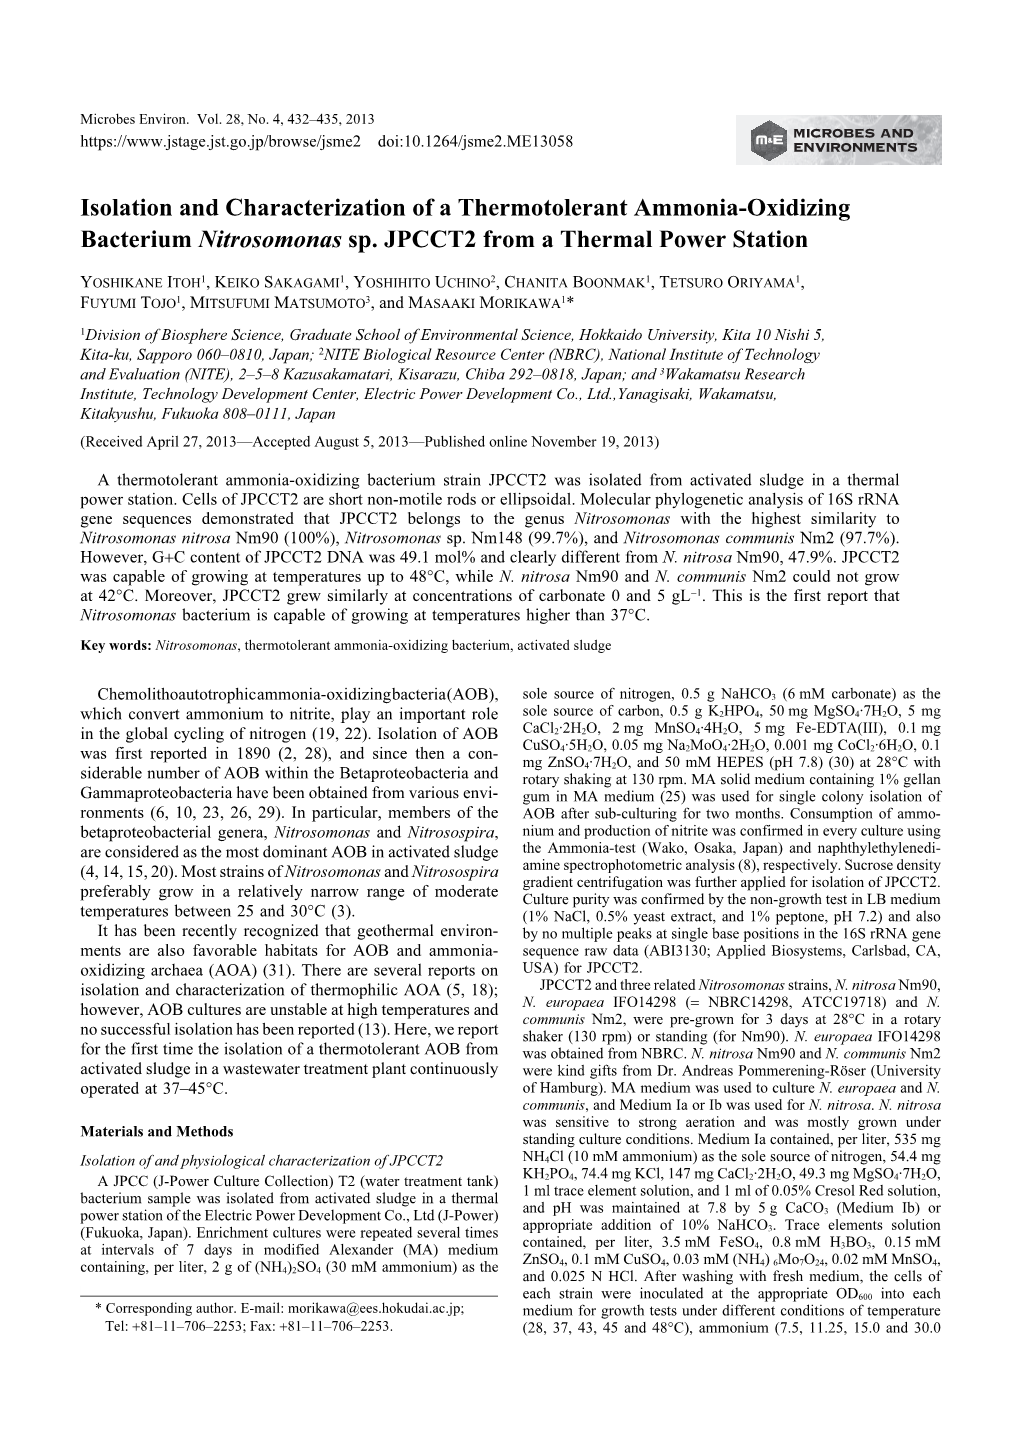 Isolation and Characterization of a Thermotolerant Ammonia-Oxidizing Bacterium Nitrosomonas Sp